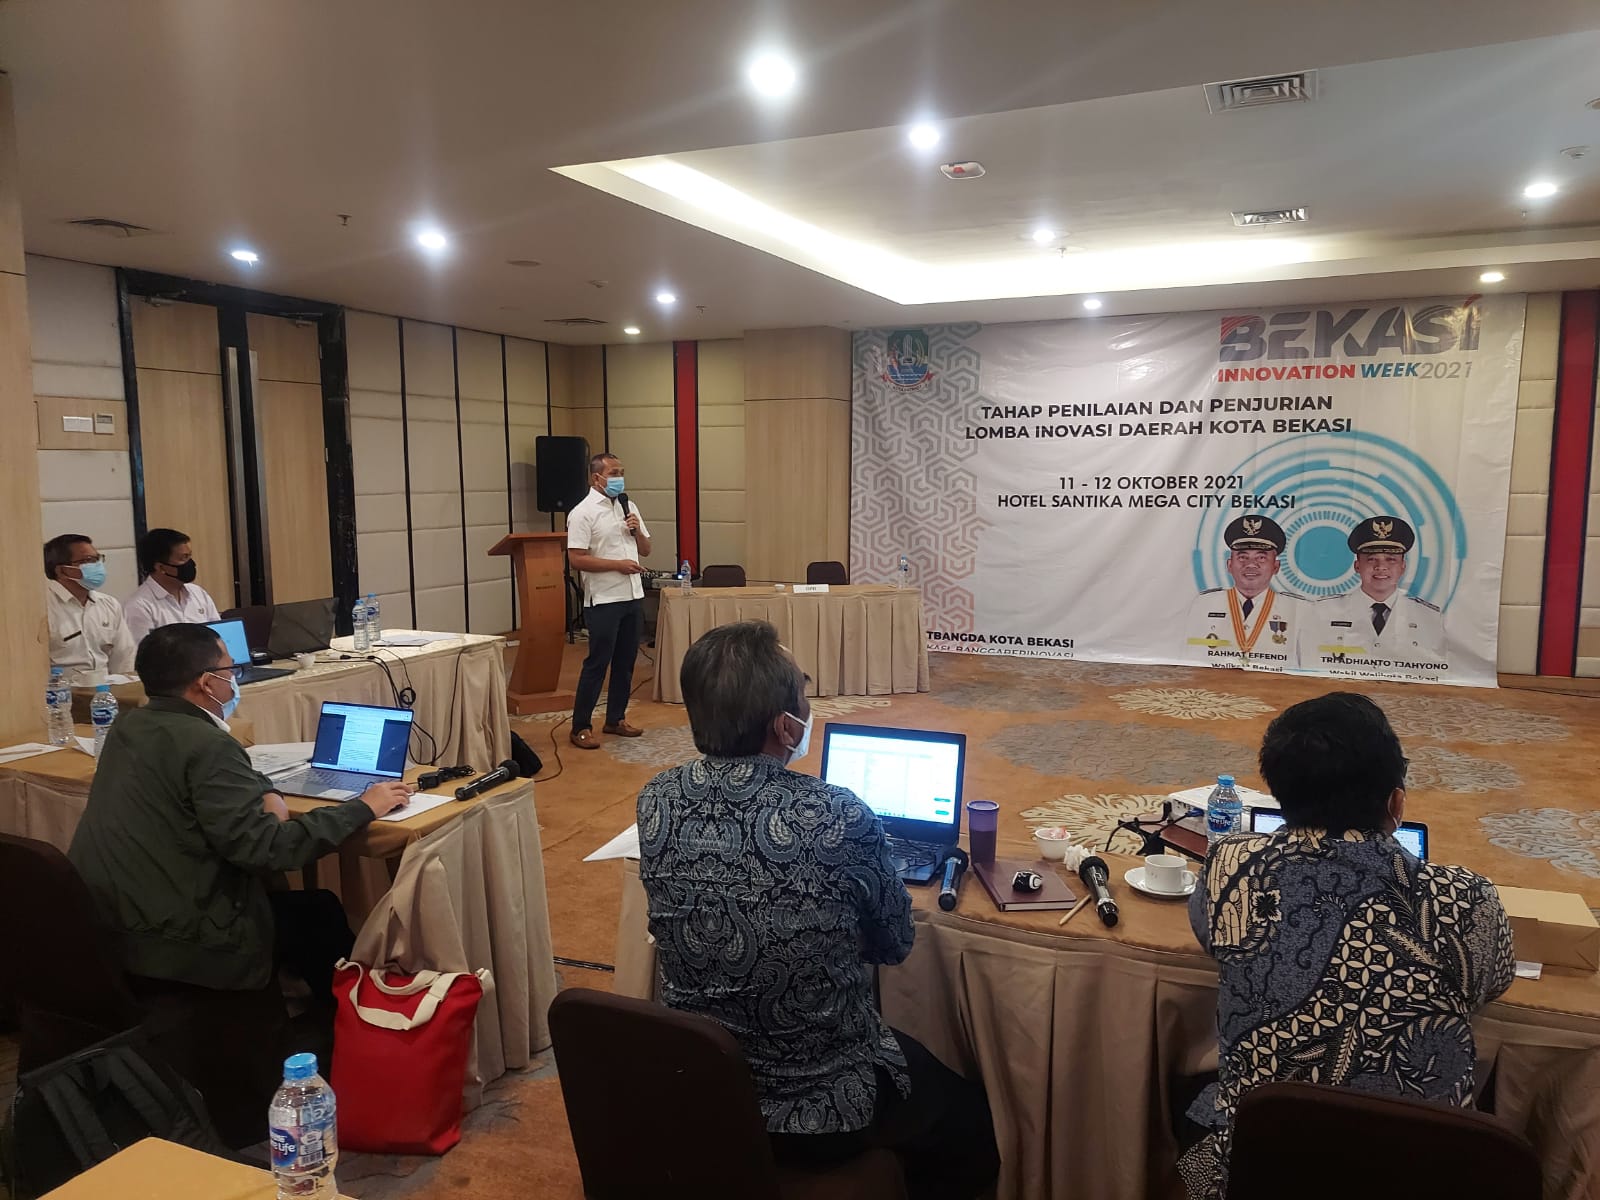 Kadiskominfostandi Presentasikan Aplikasi Monika di Ajang Bekasi Innovation Week 